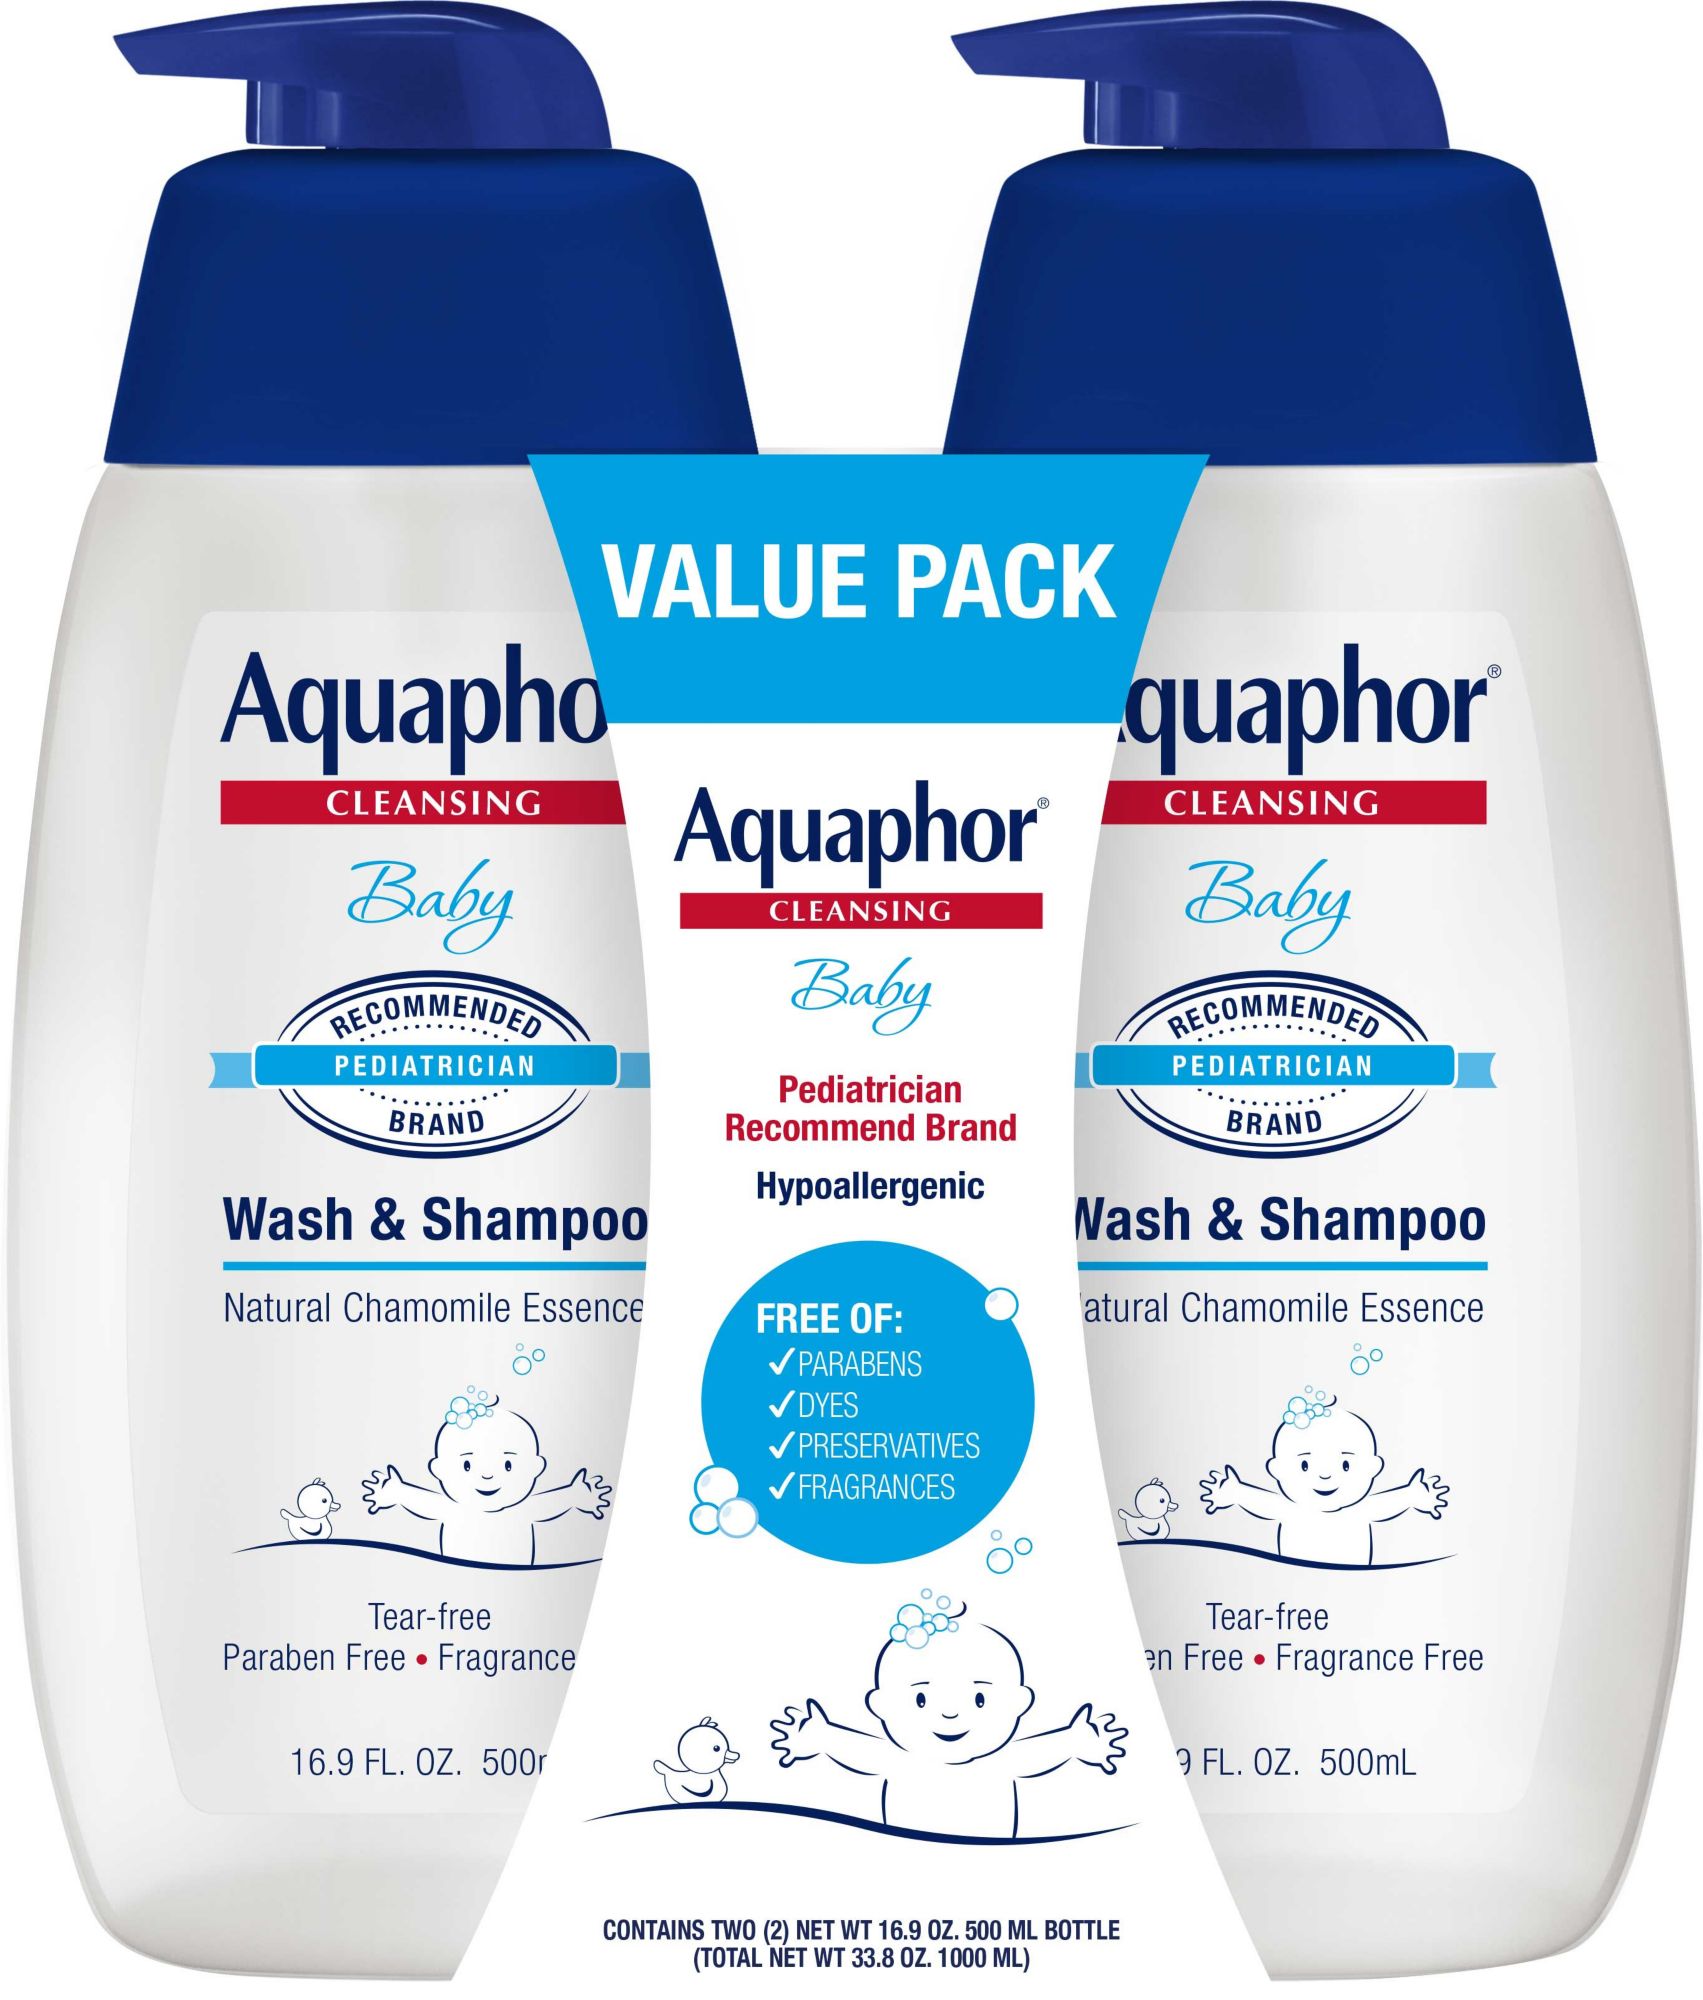 aquaphor baby gentle wash & shampoo